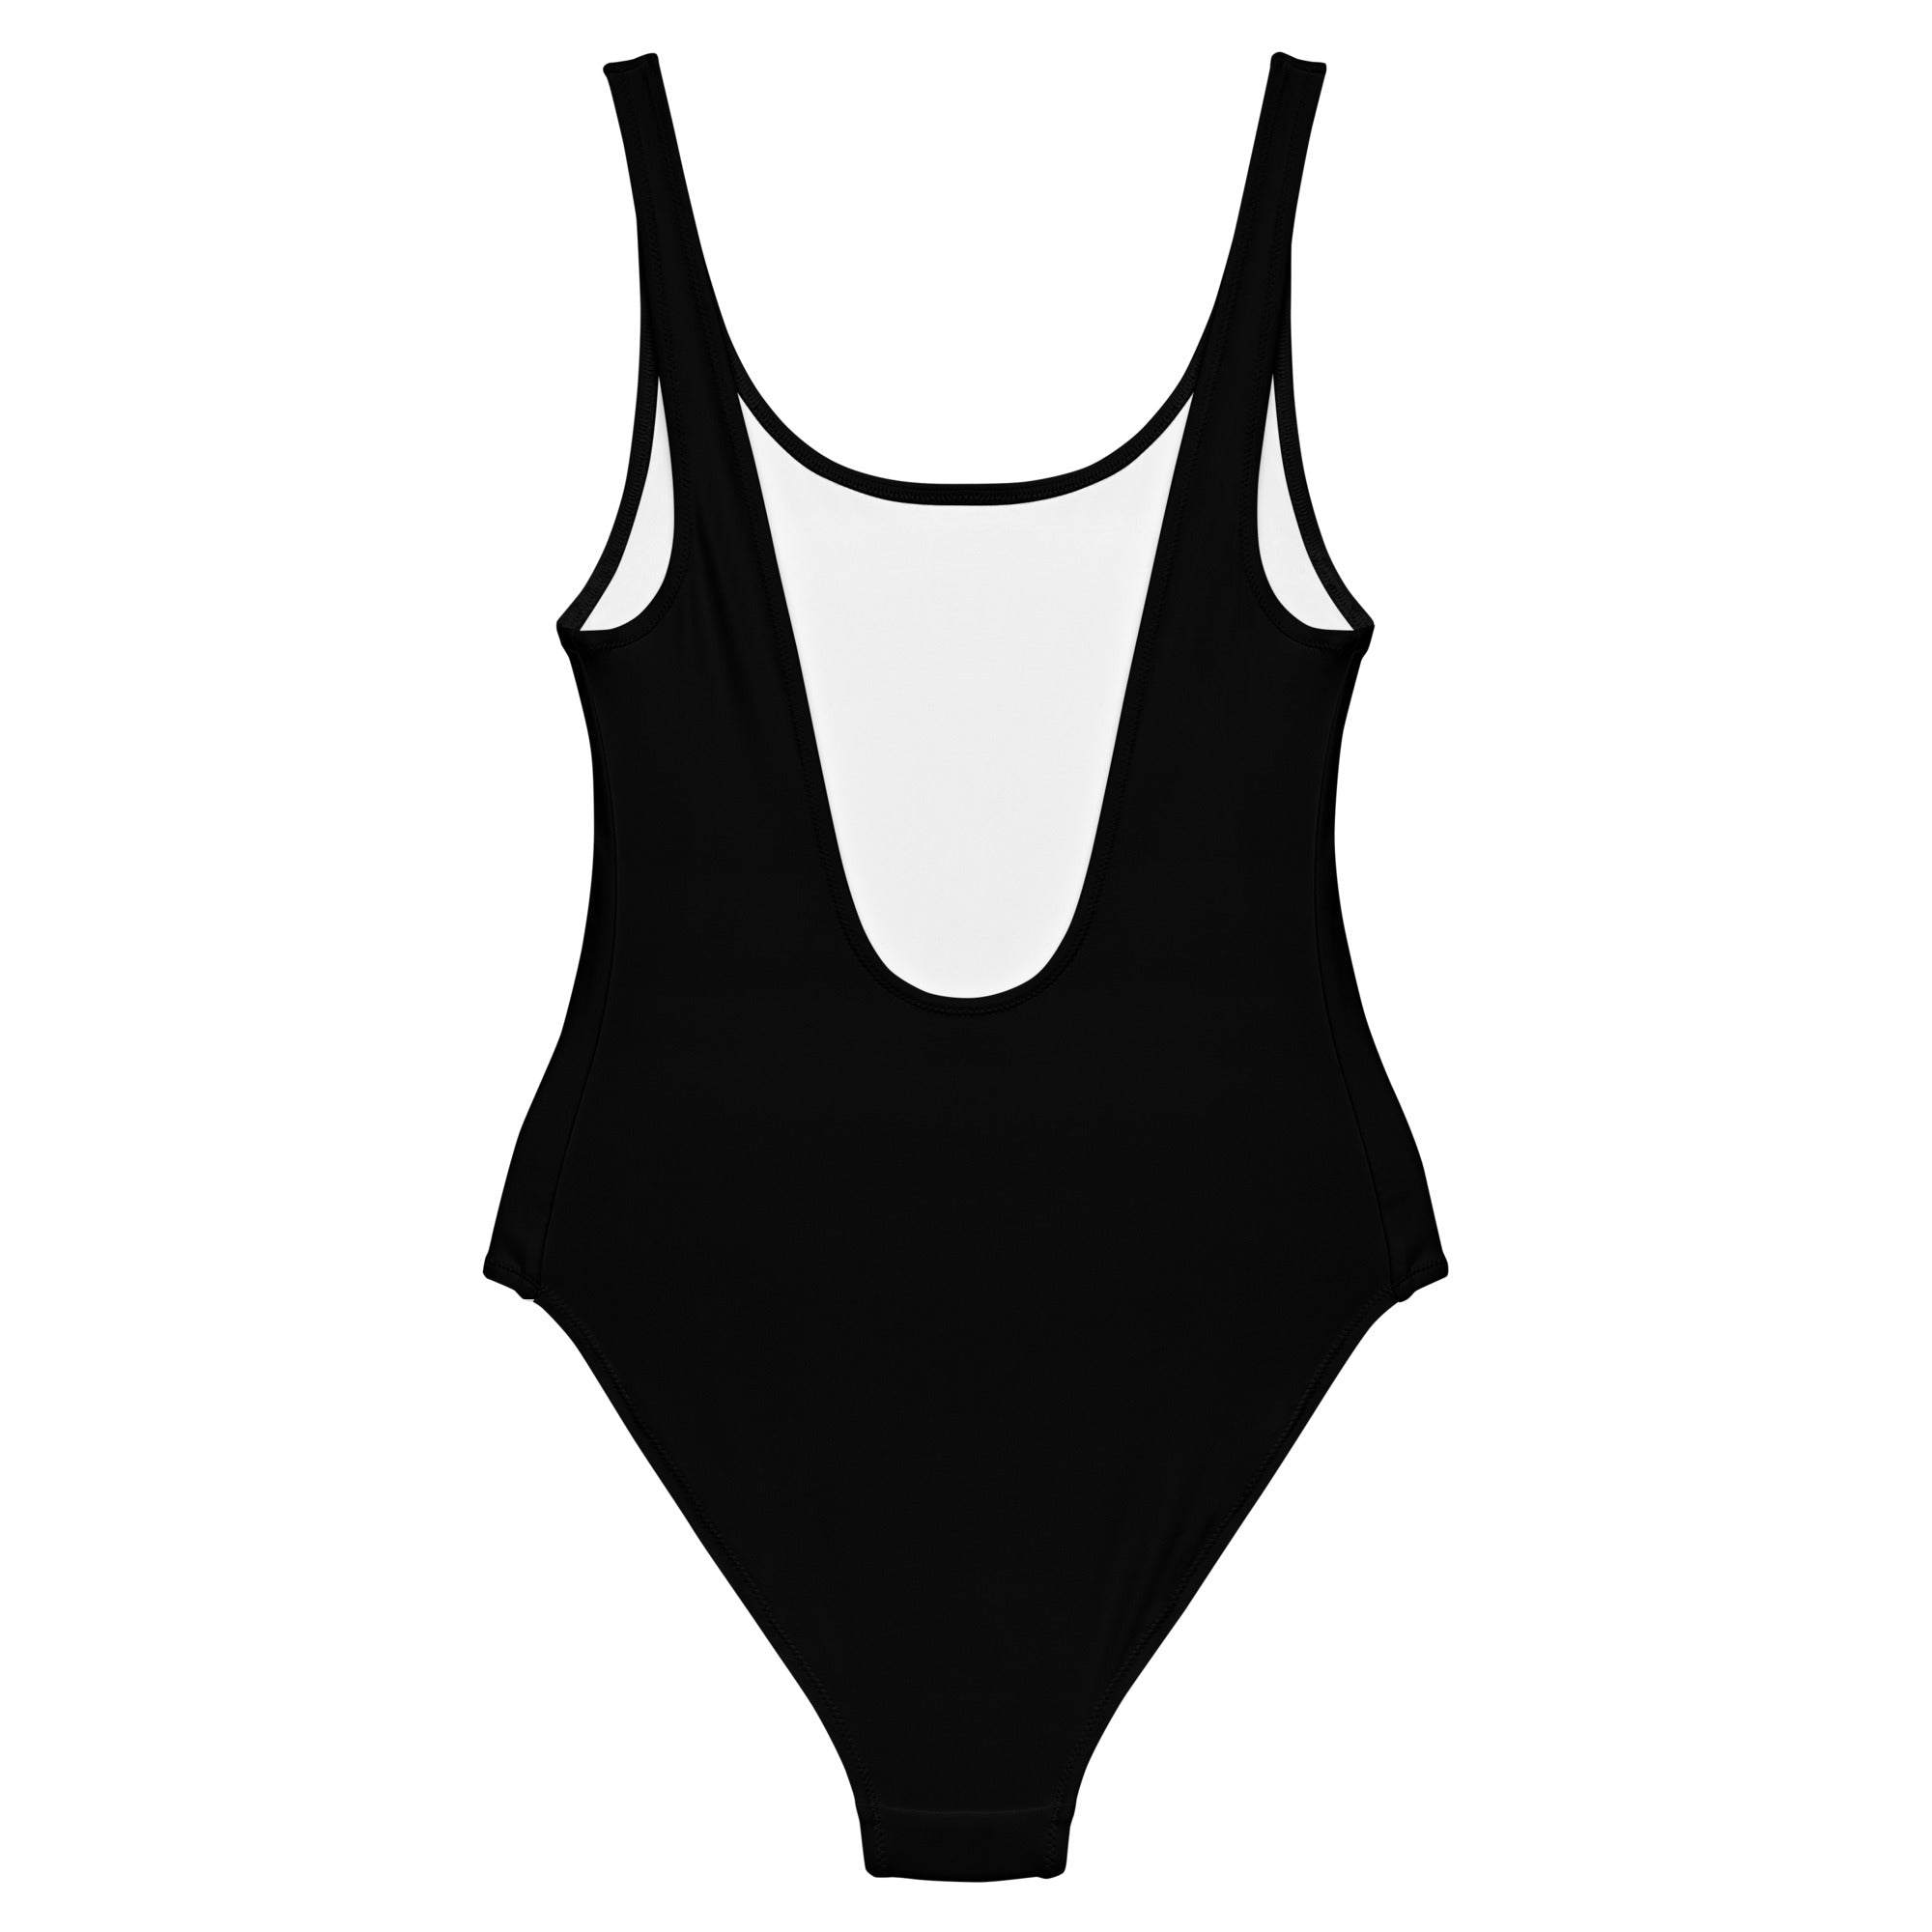 LEGACY One-Piece Swimsuit - Black | White Shark